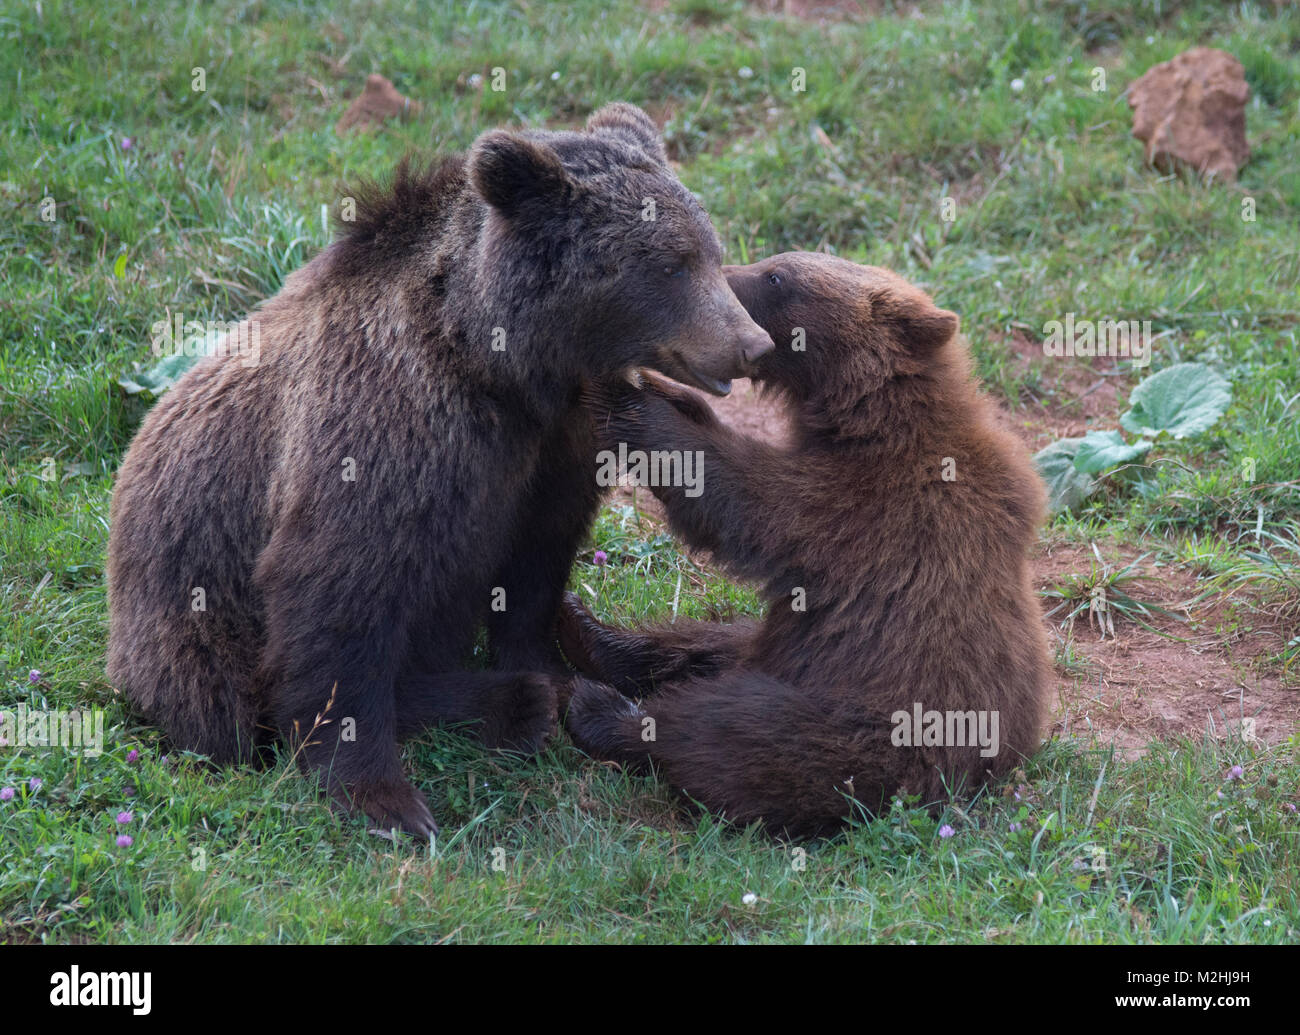 Brauner Bär Mutter und Kind im Naturpark Parque de la Naturaleza de Cabárceno (Spanien) Stockfoto